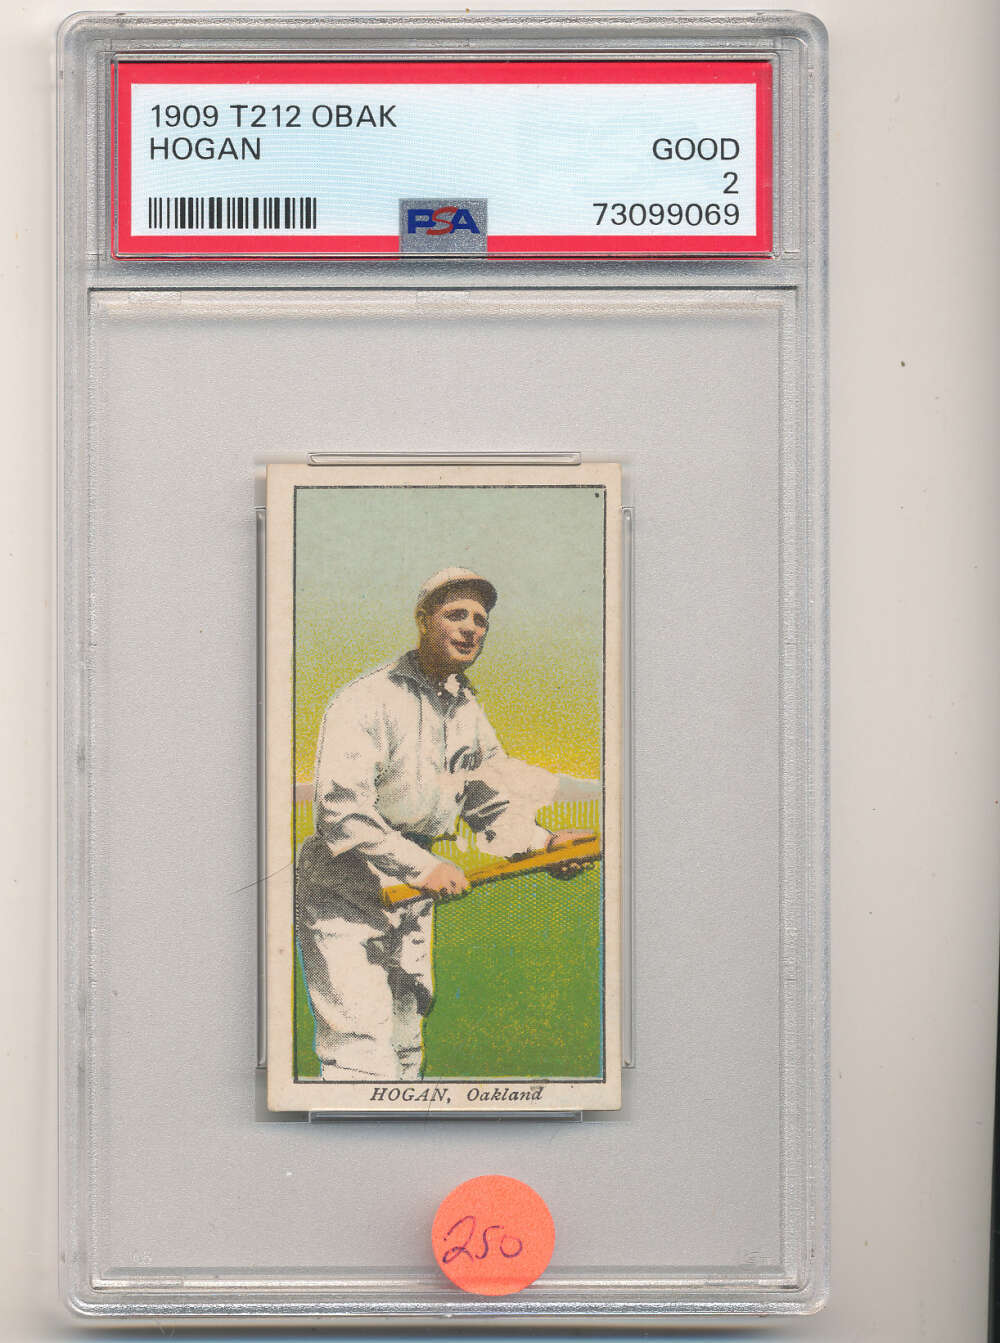 1911 t212 Obak  Hogan Oakland Oaks PCL psa 2 good nice  card bm3